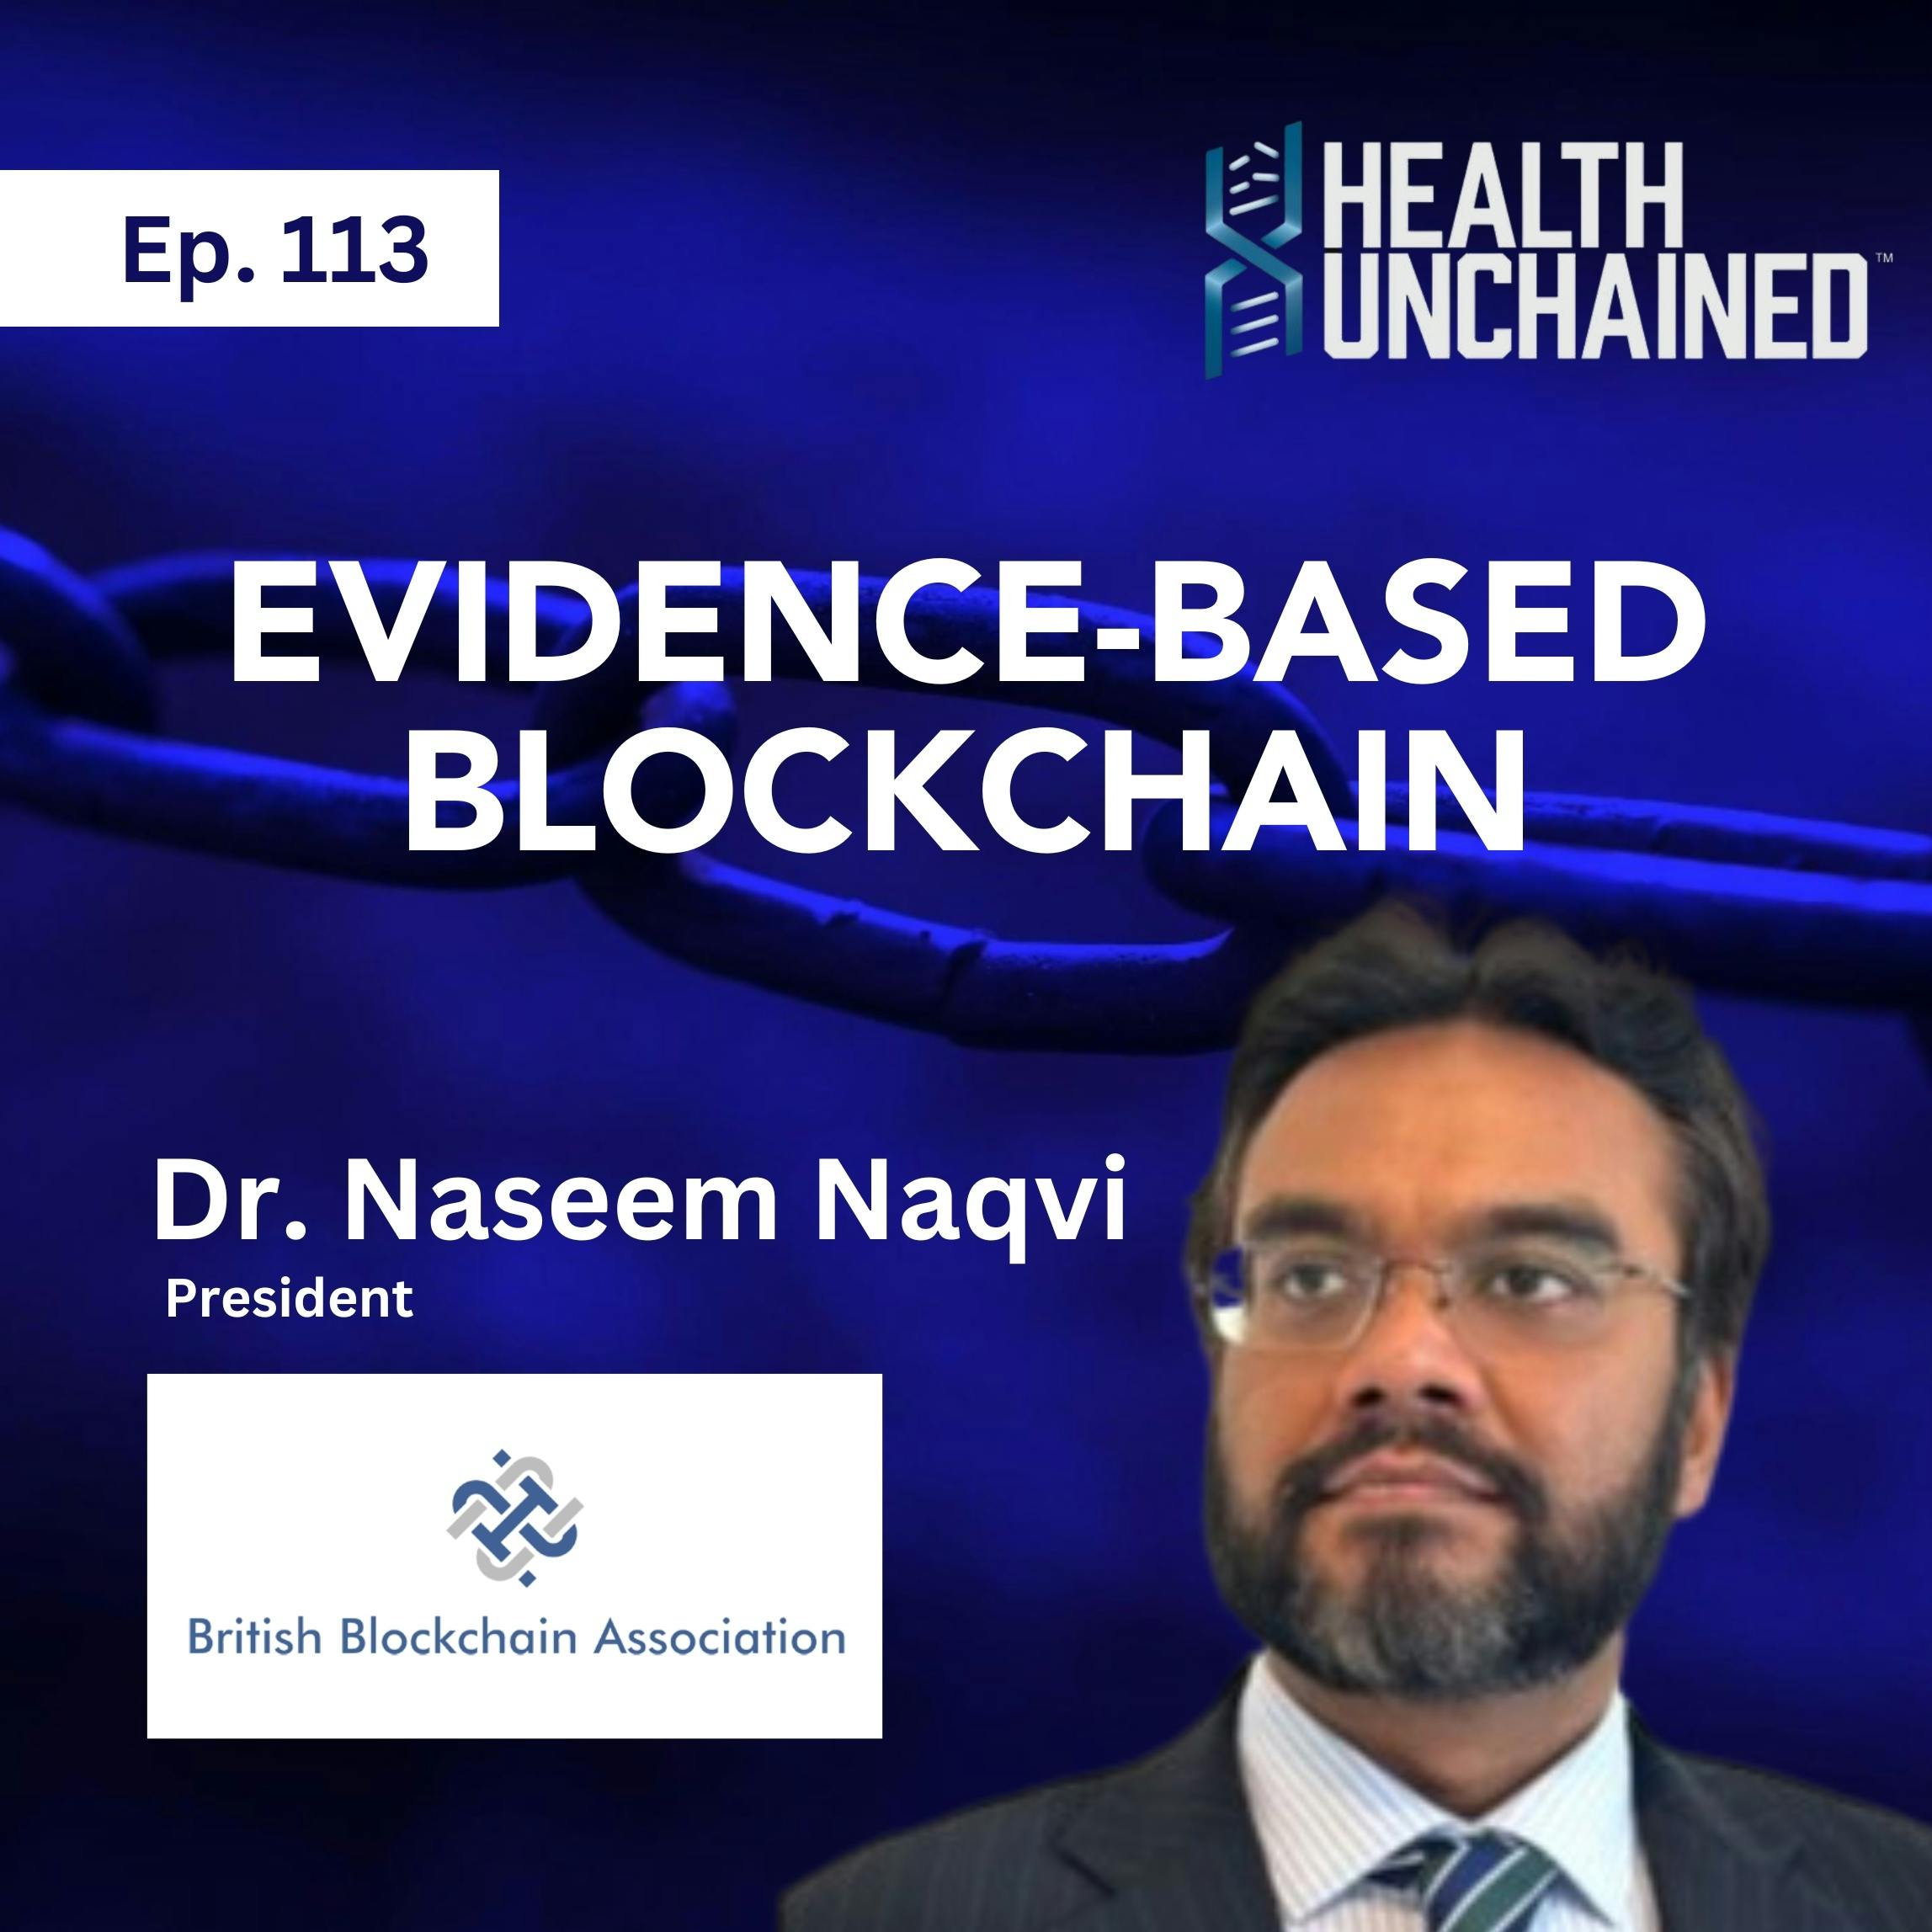 Ep. 113: Evidence-Based Blockchain – Dr. Naseem Naqvi (President of British Blockchain Association)